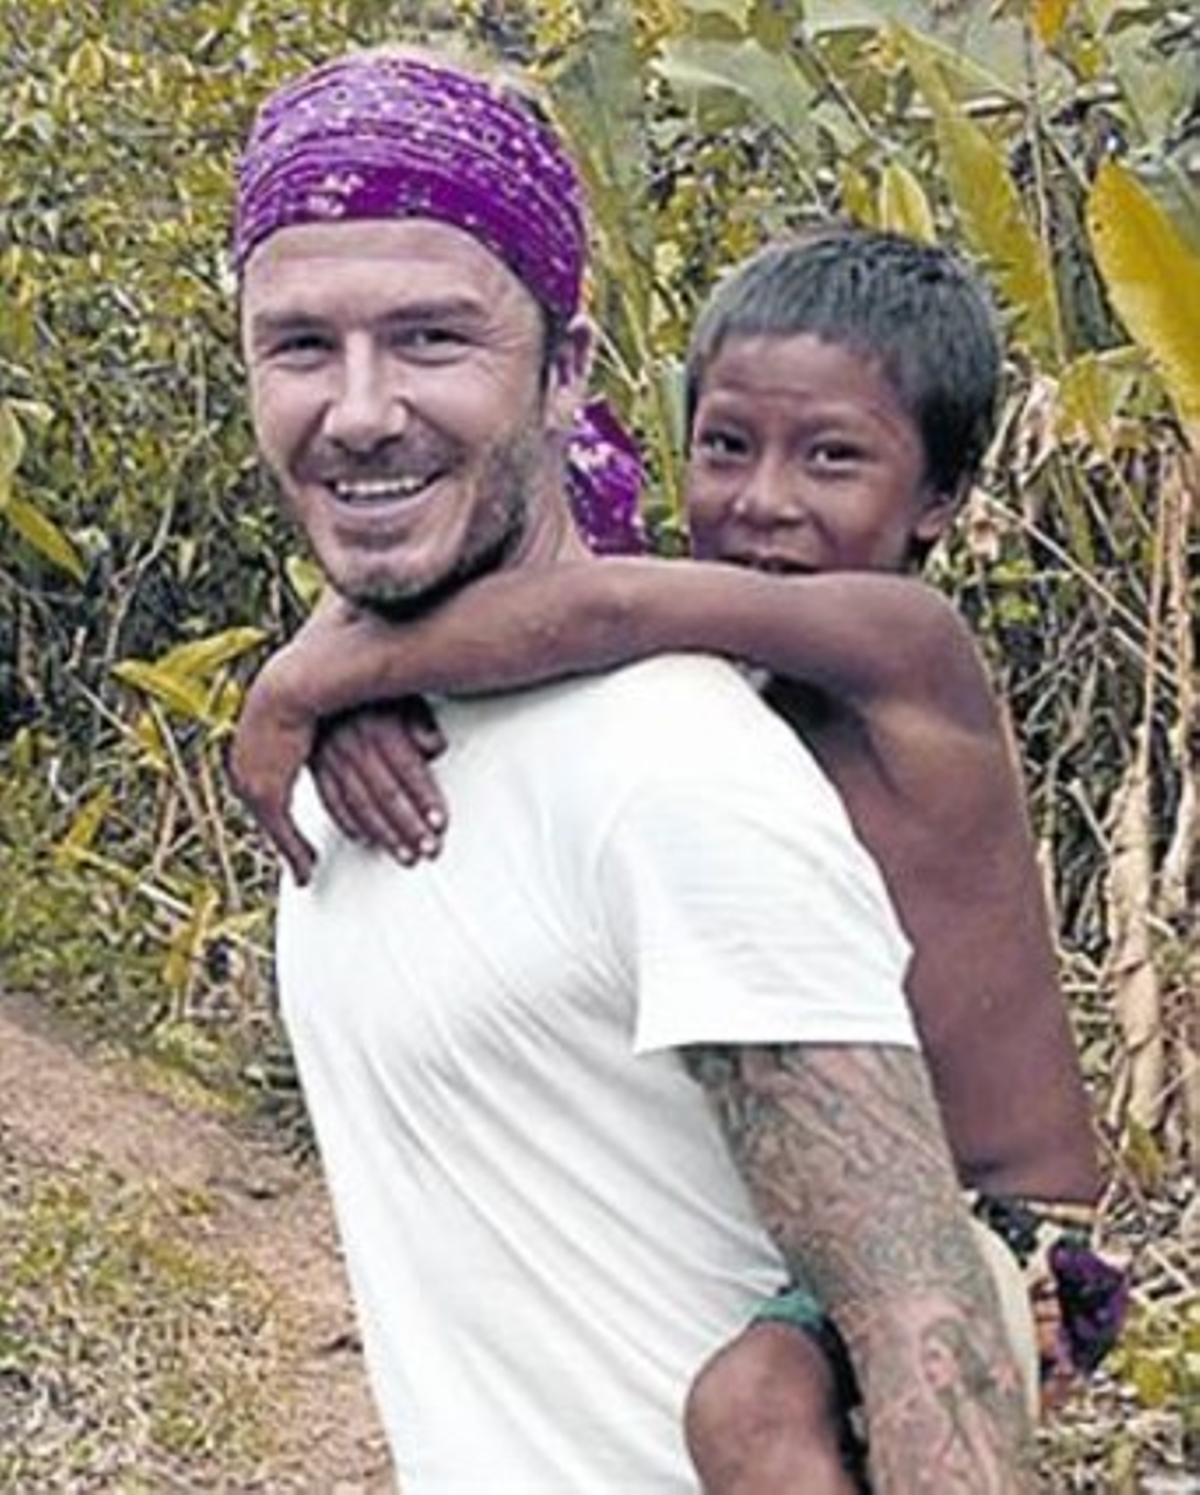 David Beckham.